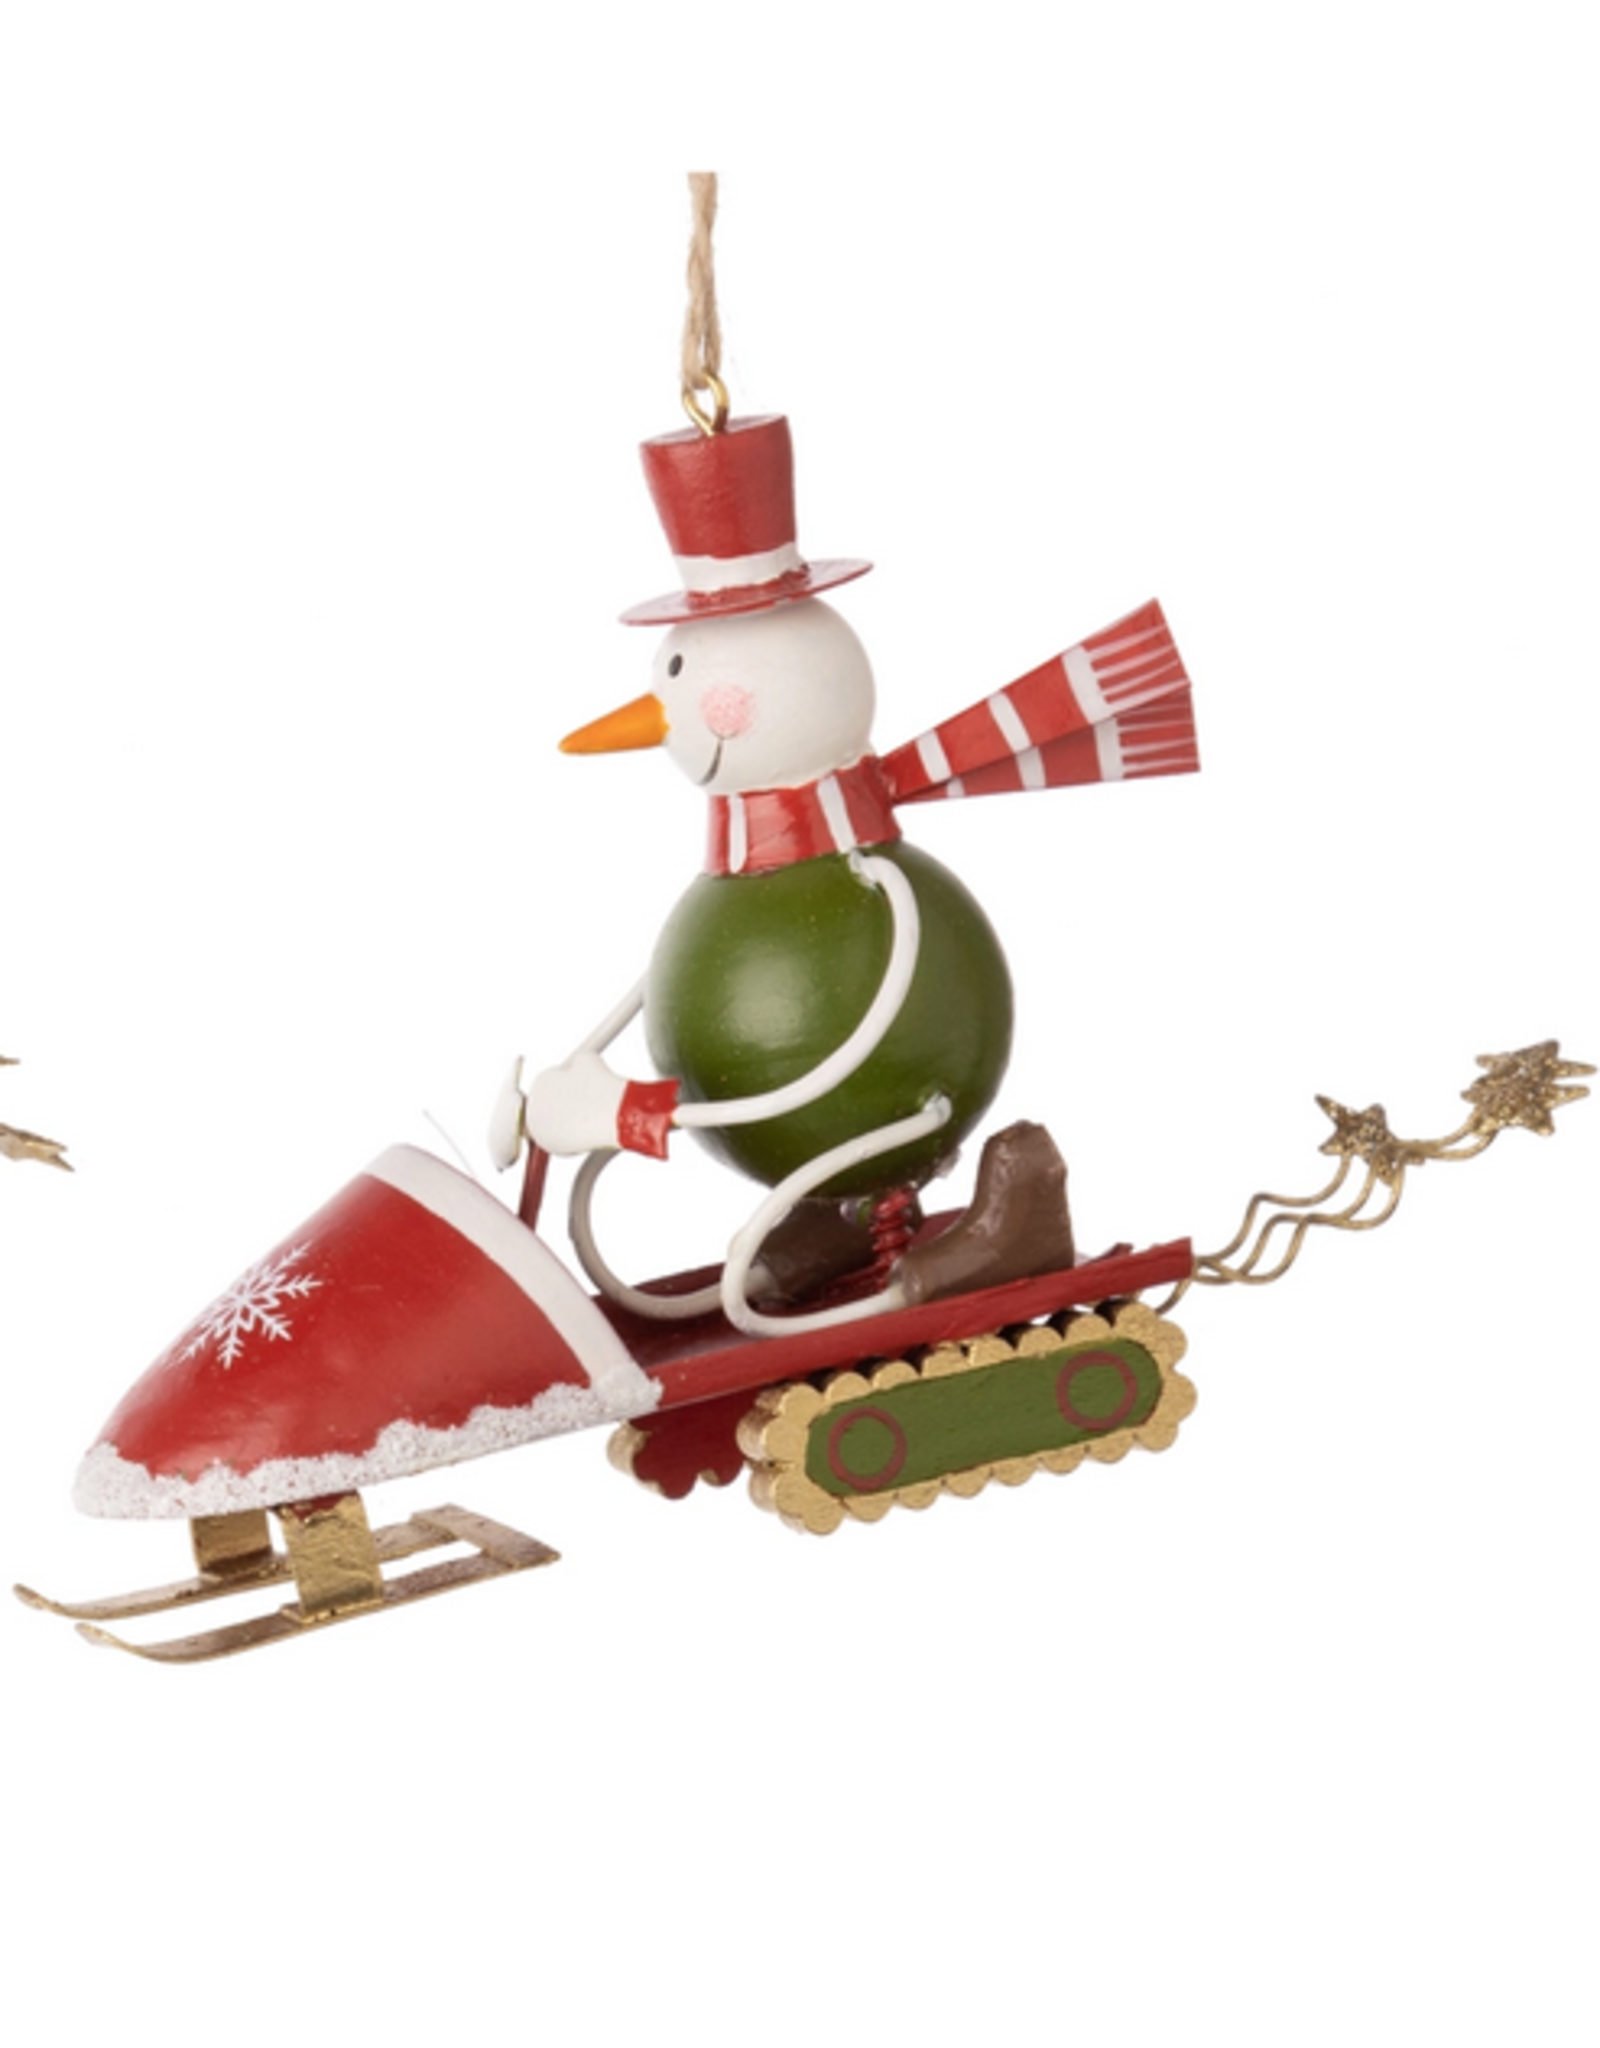 Silver Tree Home & Holiday Holiday Ski-Doo Ornaments